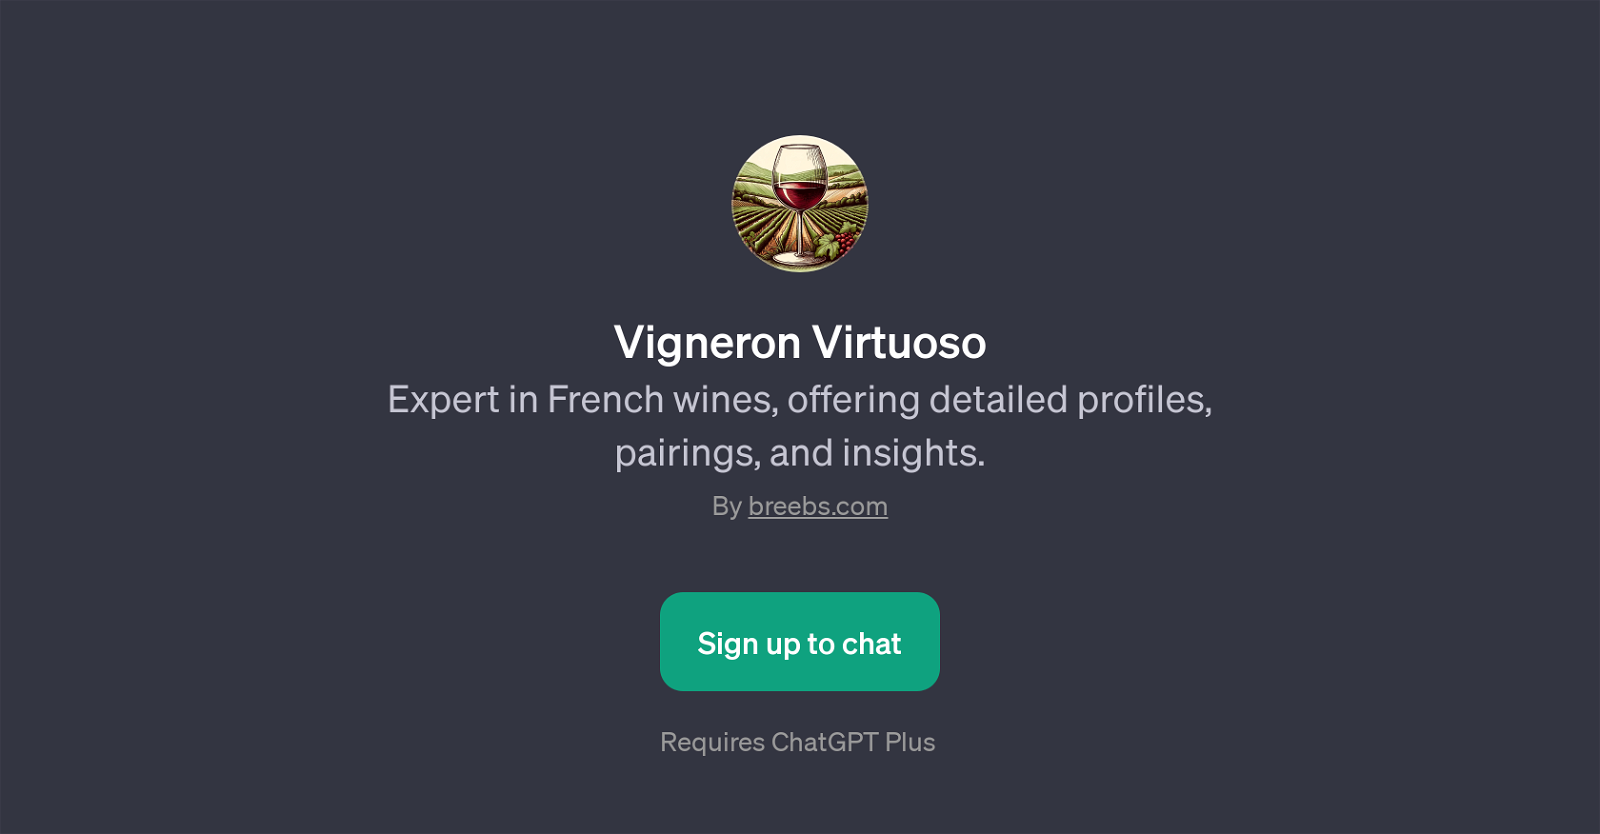 Vigneron Virtuoso website